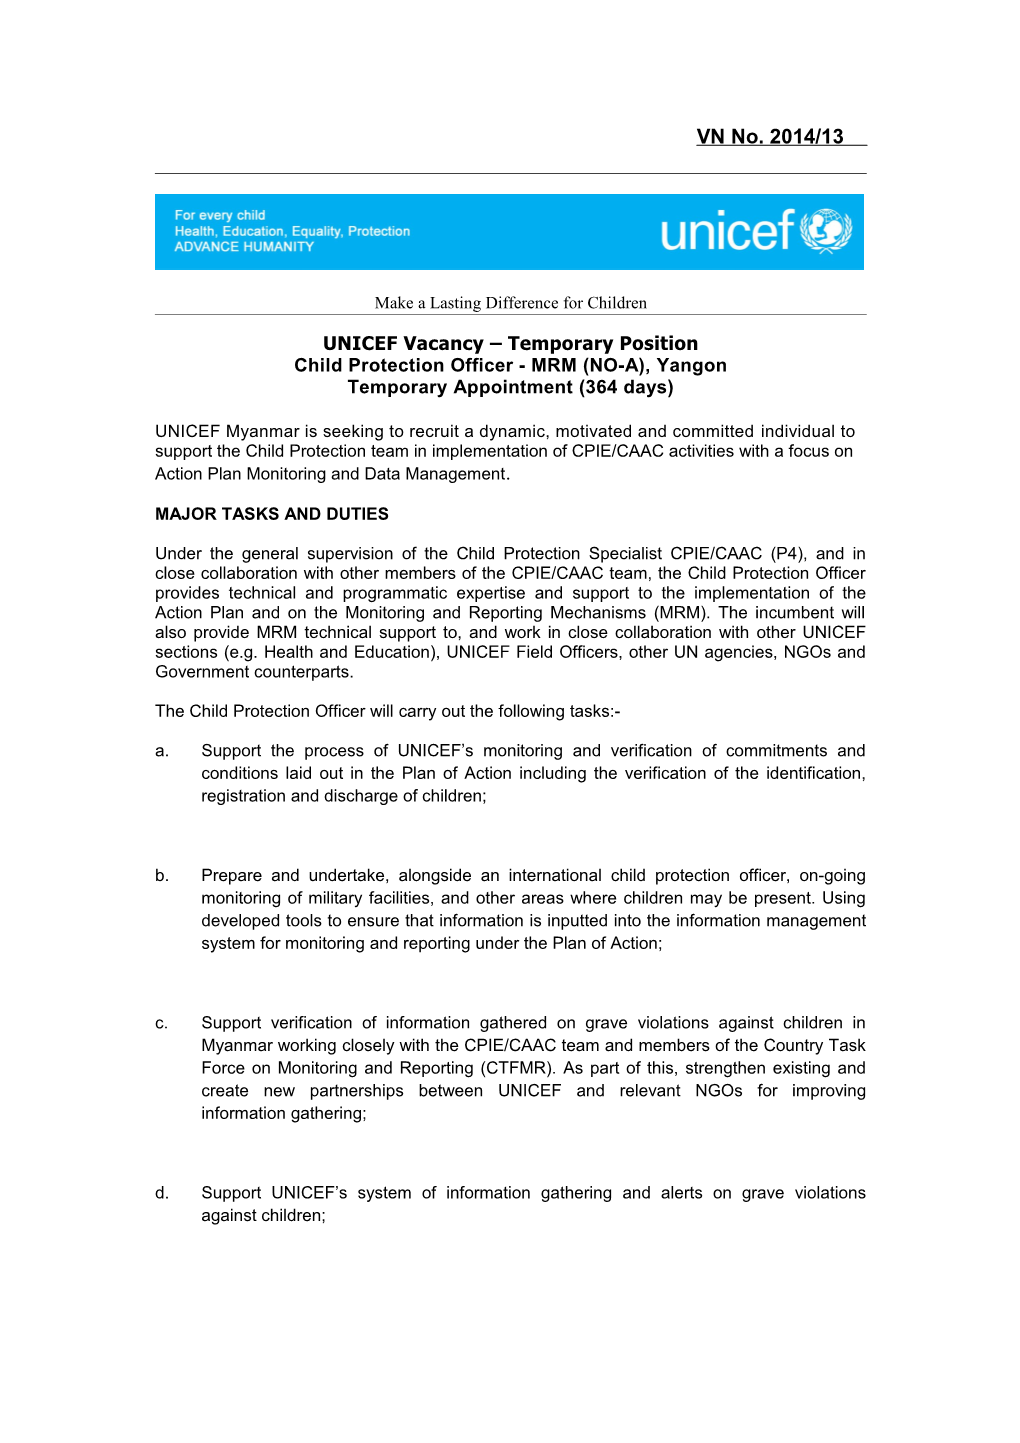 UNICEF Vacancy Temporary Position